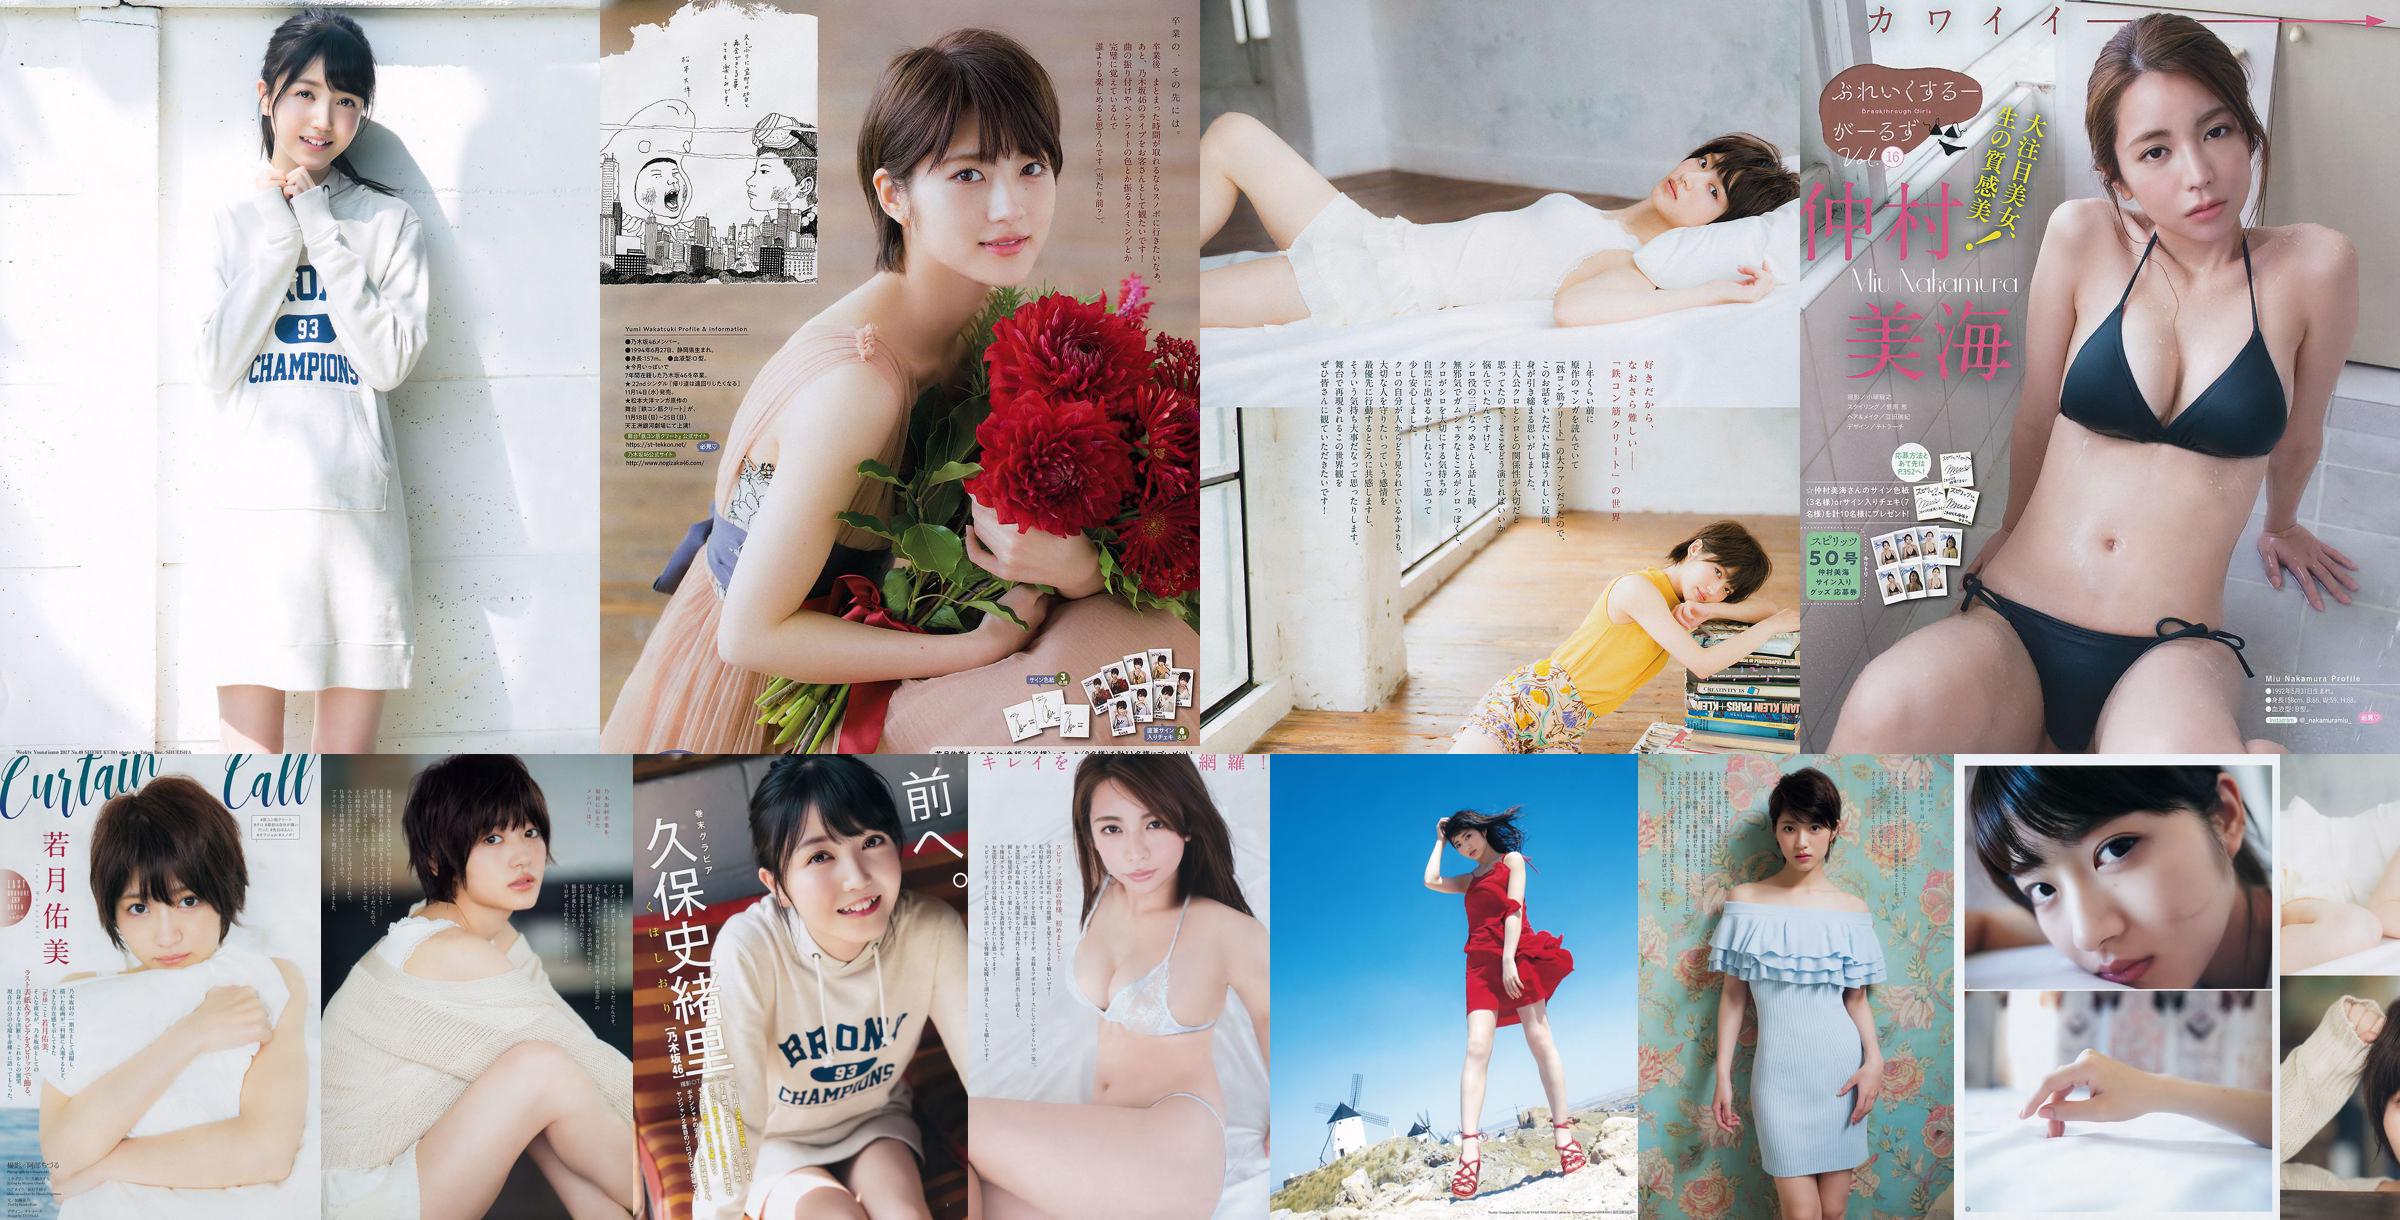 [Grands esprits de la bande dessinée hebdomadaire] Wakazuki Yumi Nakamura Mihai 2018 Magazine photo n ° 50 No.65d96f Page 2